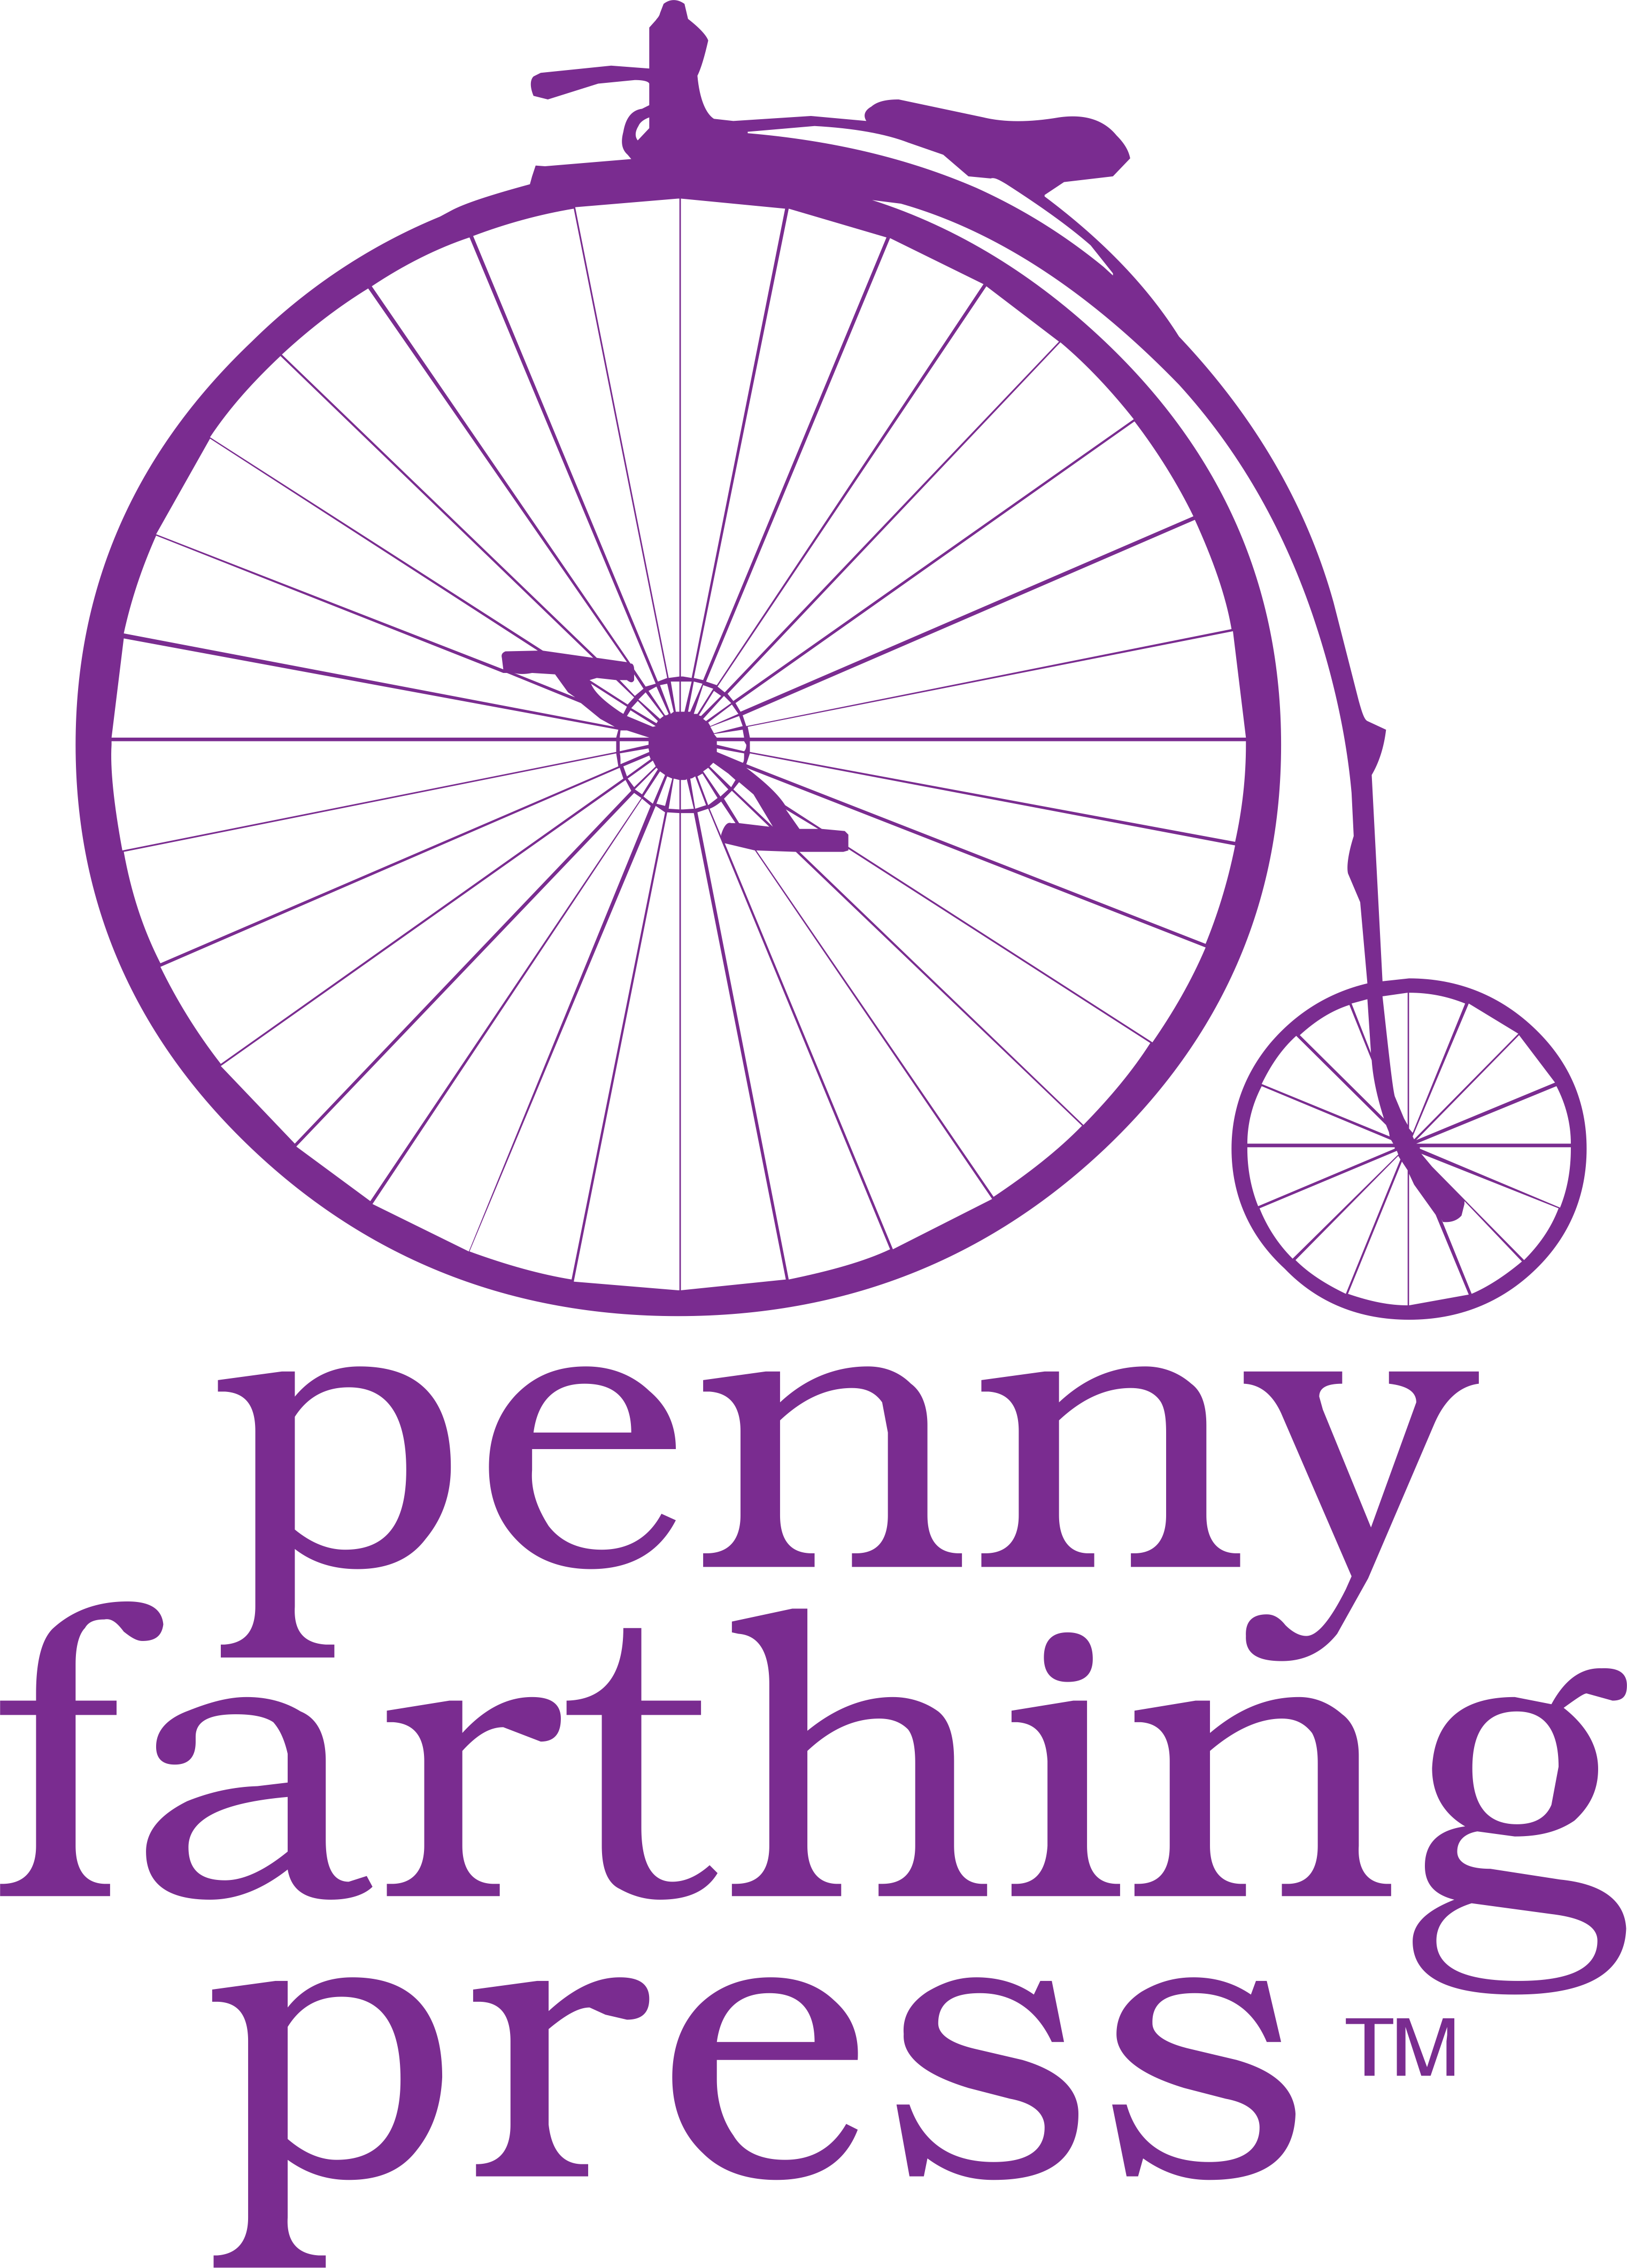 Penny Farthing Press